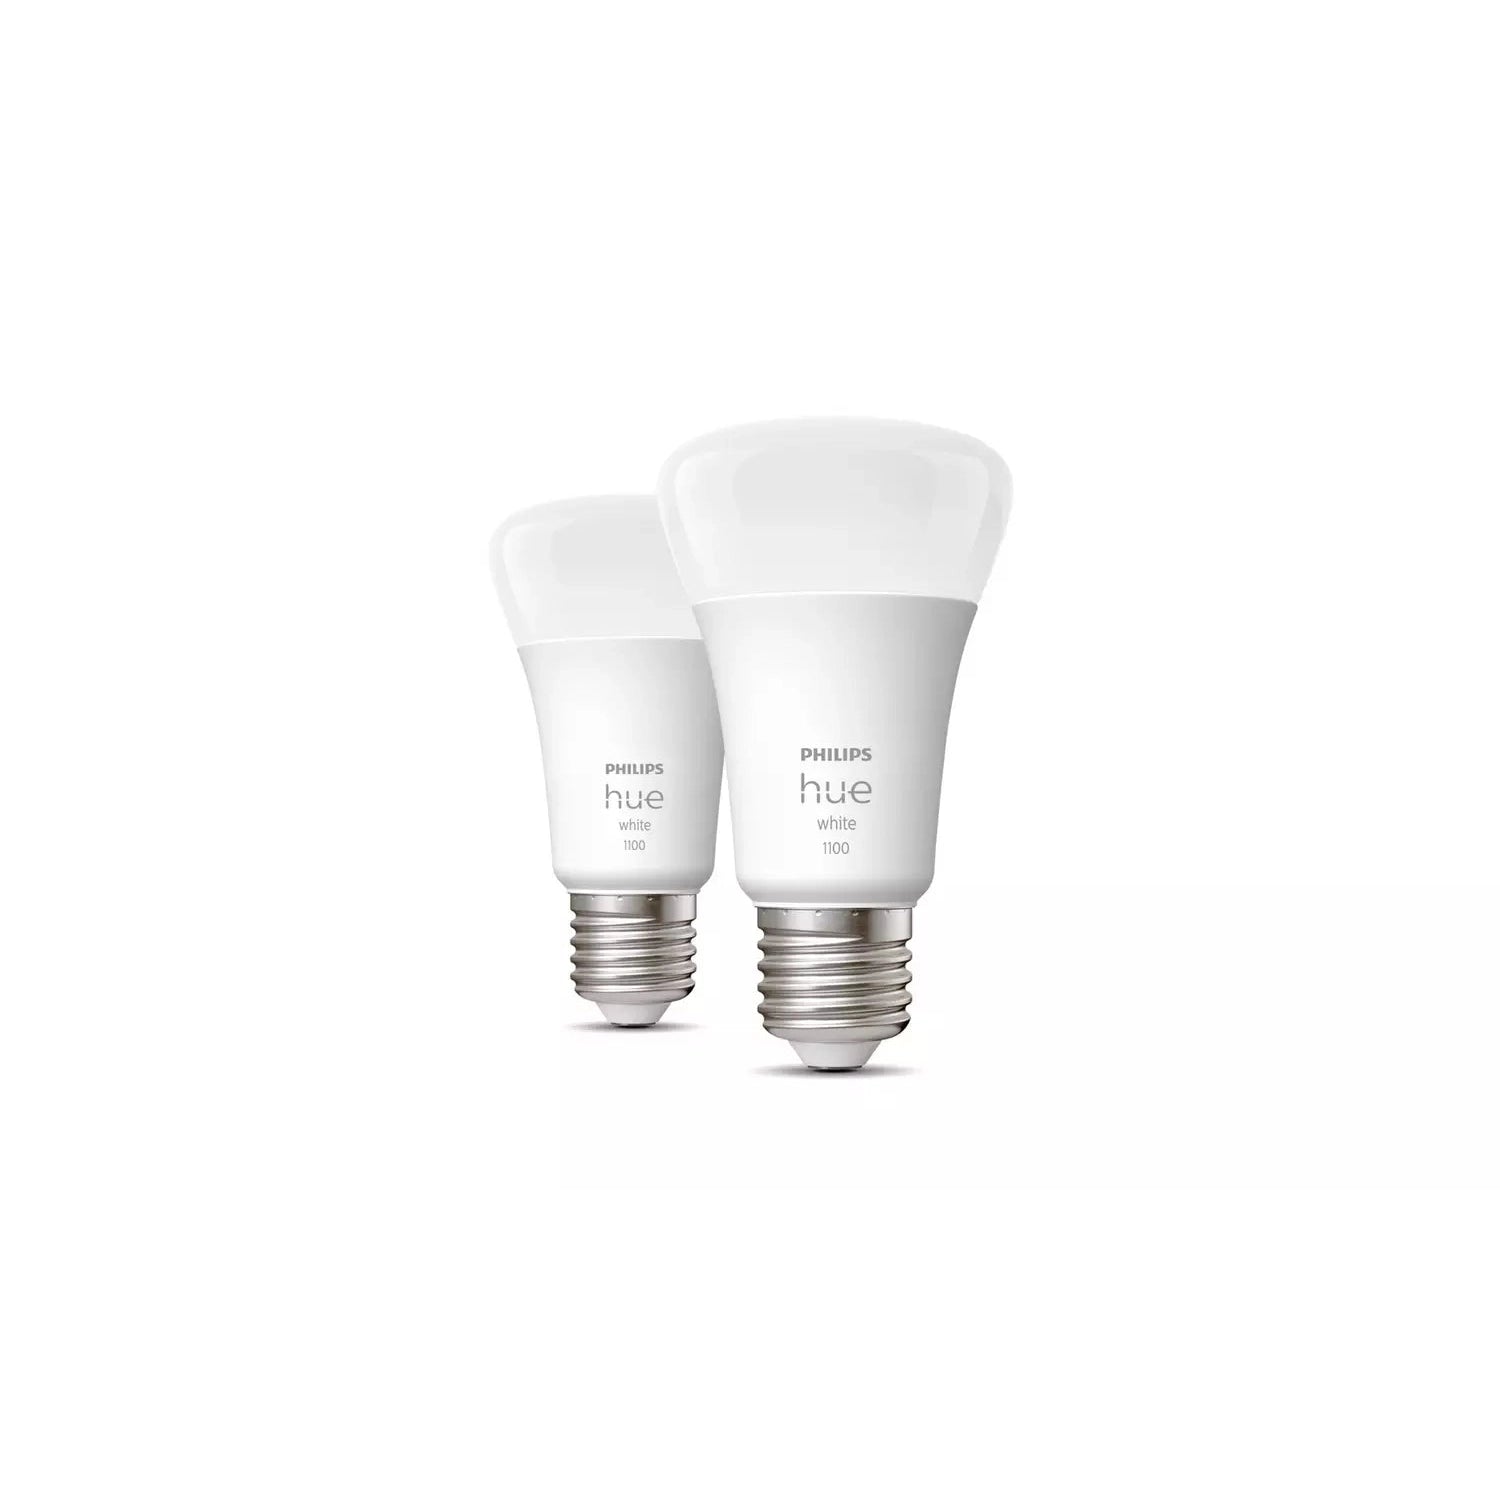 Philips Hue E27 White Smart Bulb With Bluetooth - 2 Pack - Refurbished Pristine